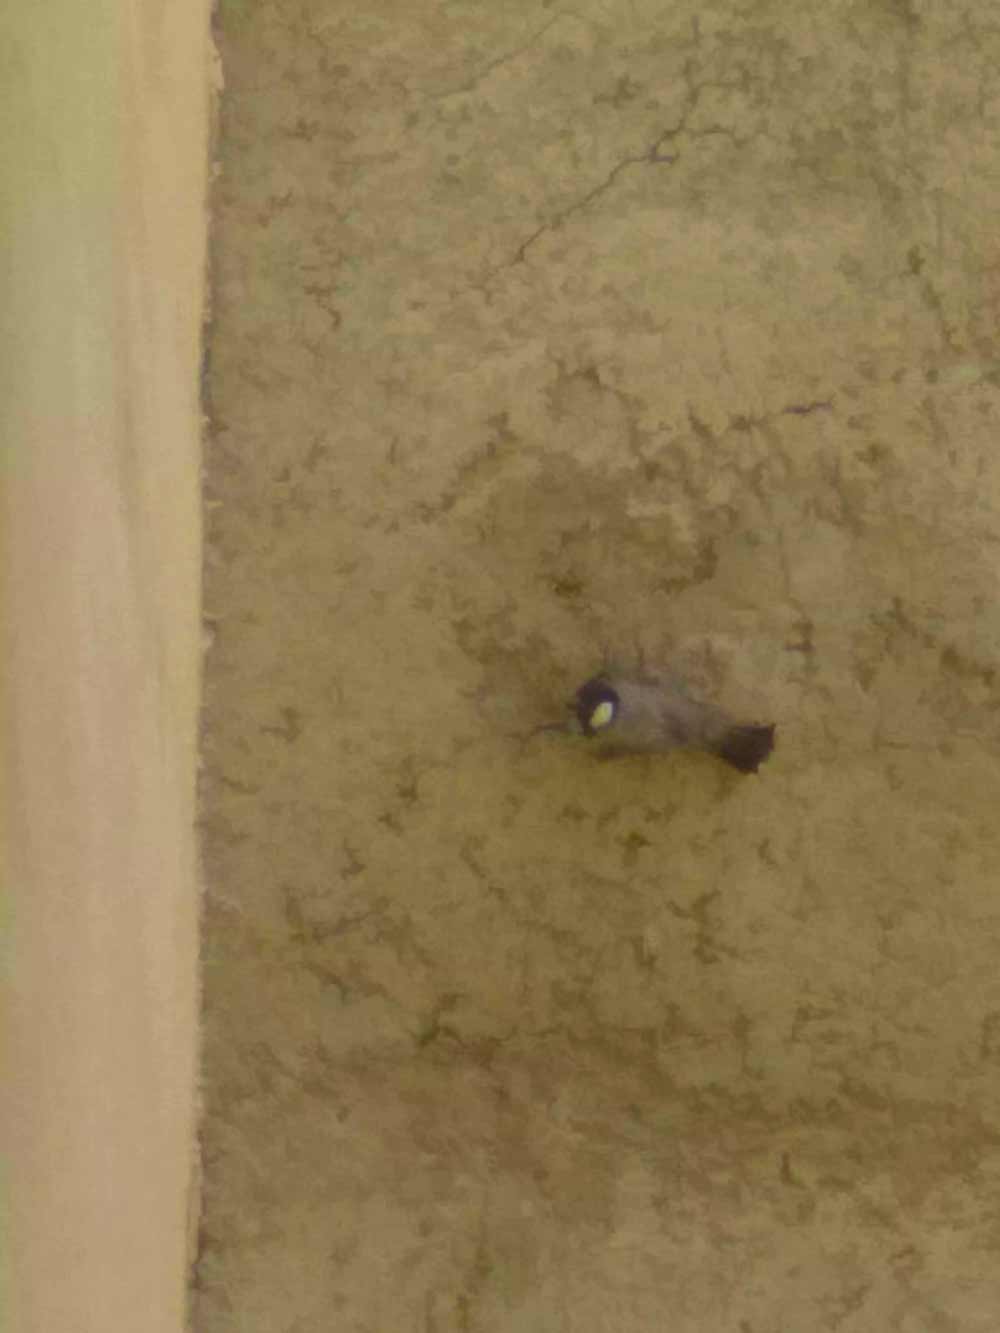 A White-Eared Bulbul sitting on a wall